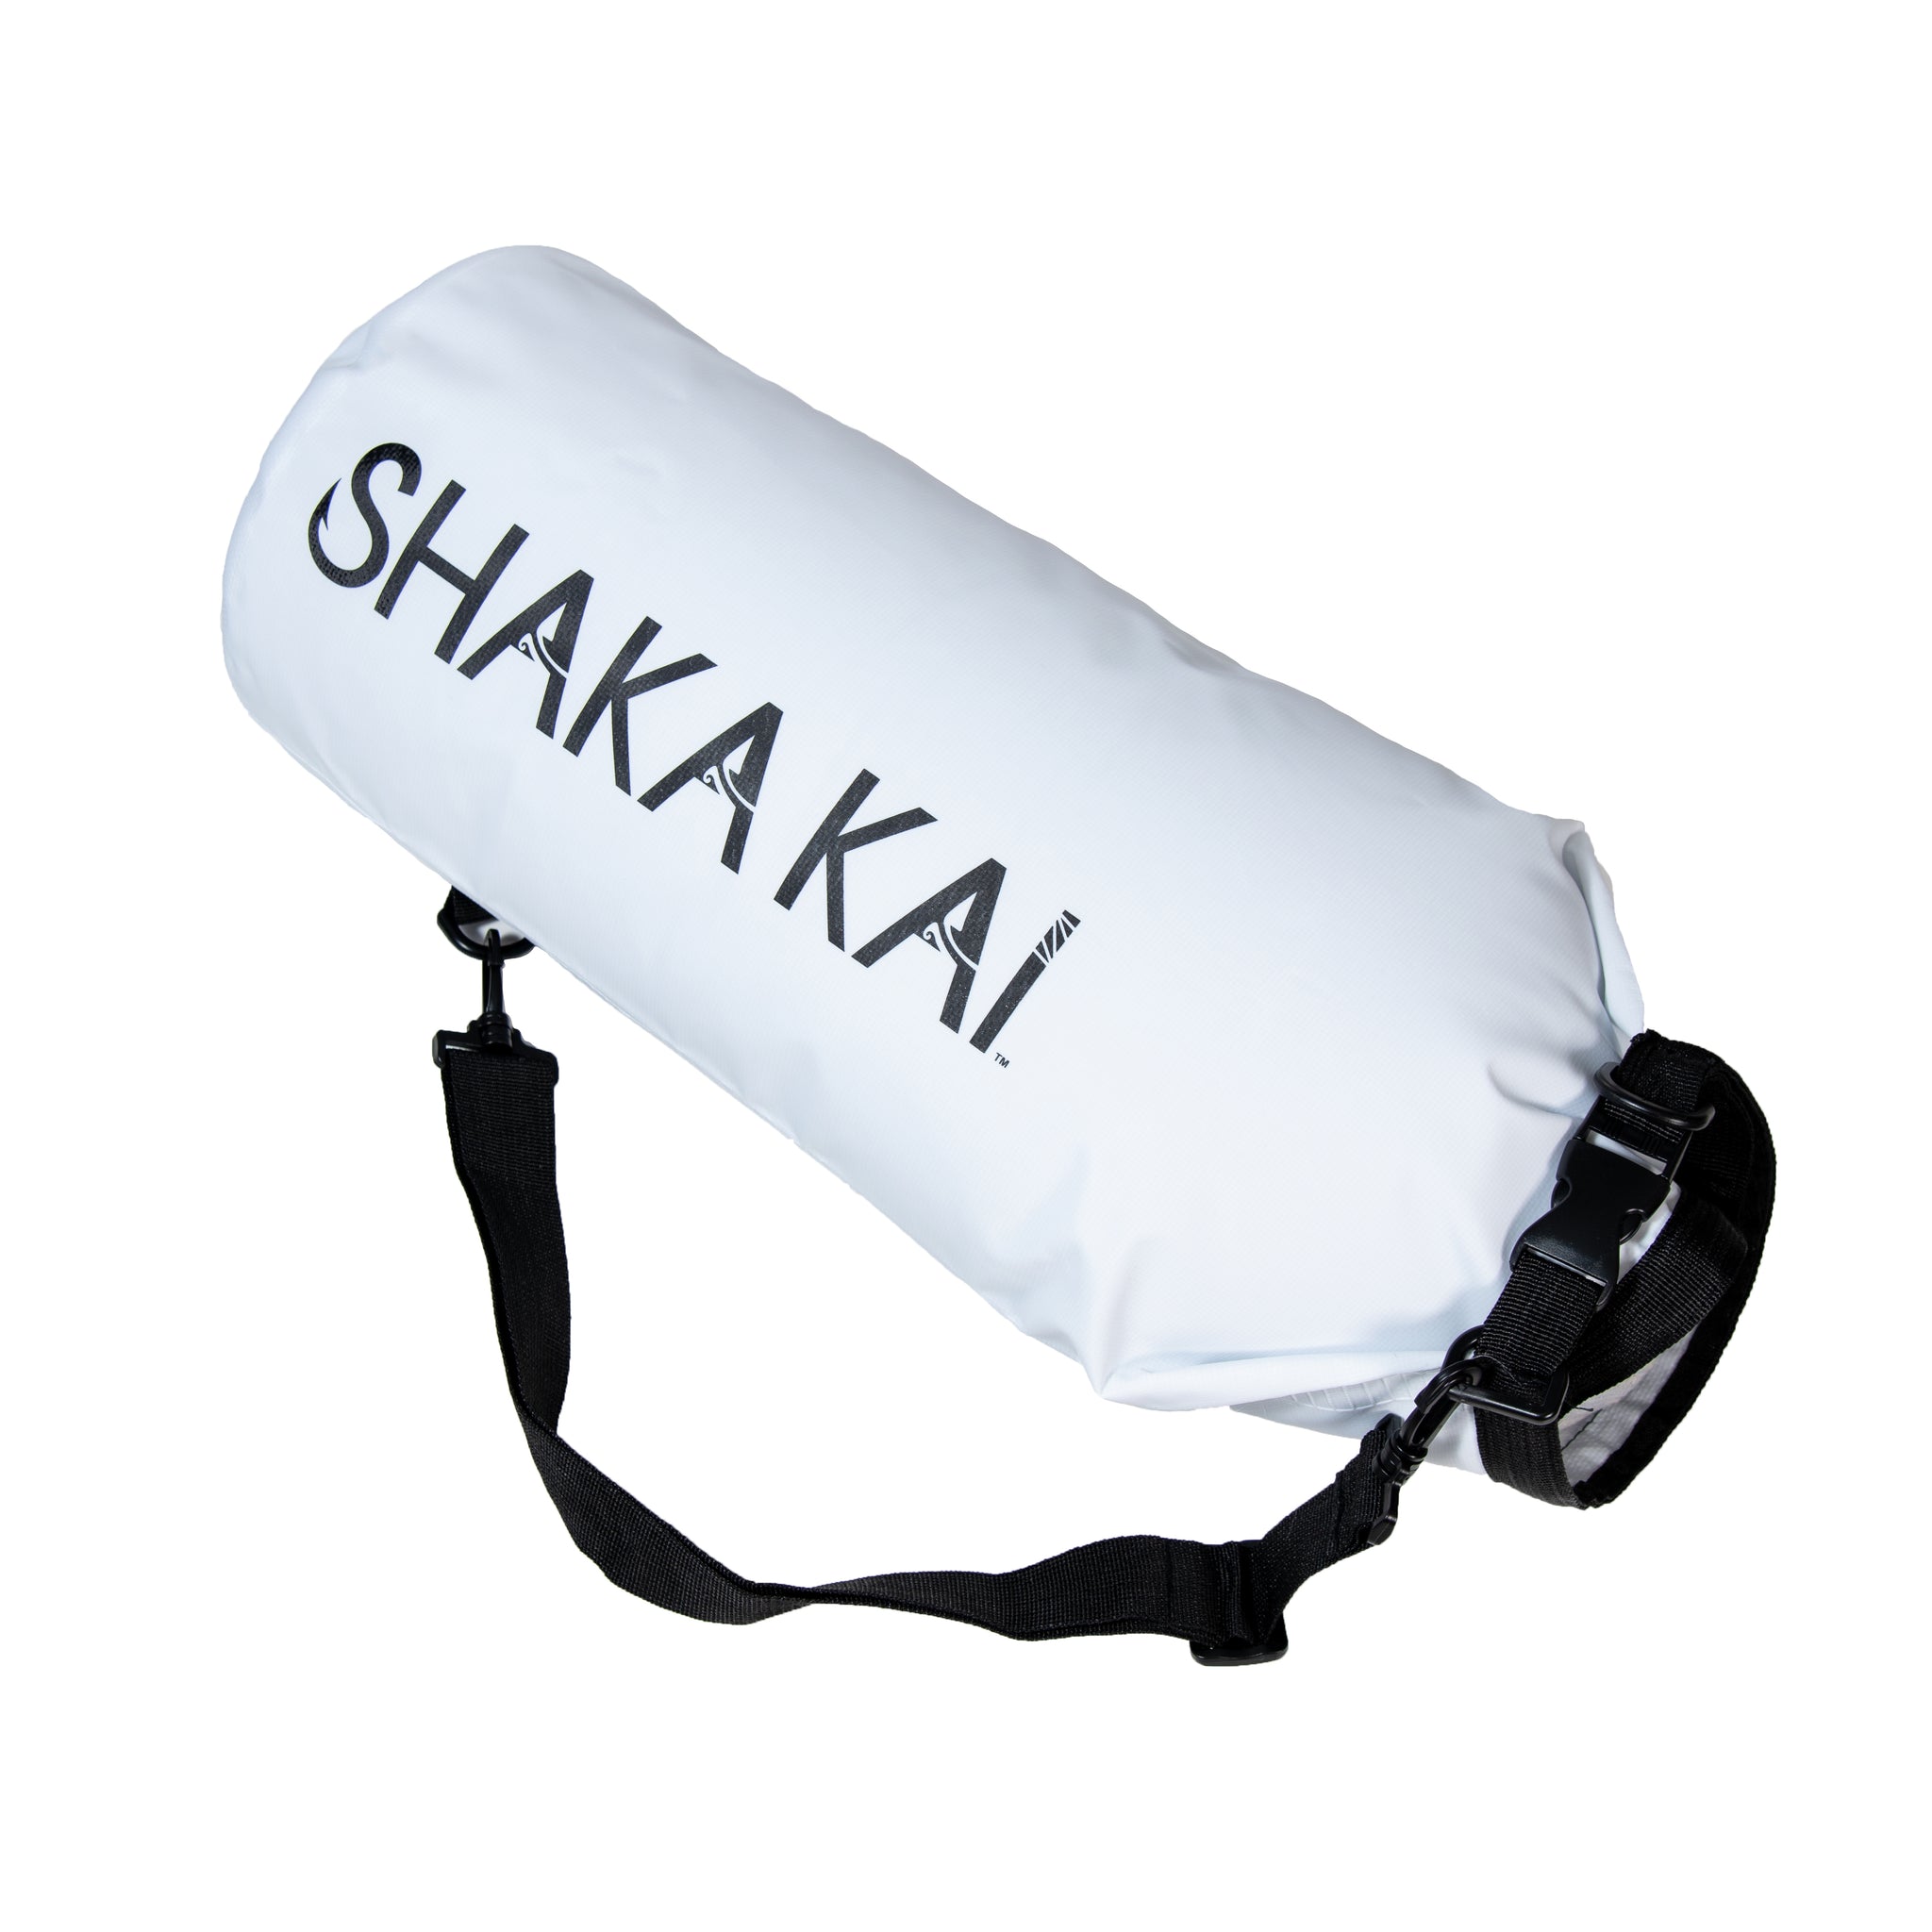 Shaka Kai Waterproof Dry Bag